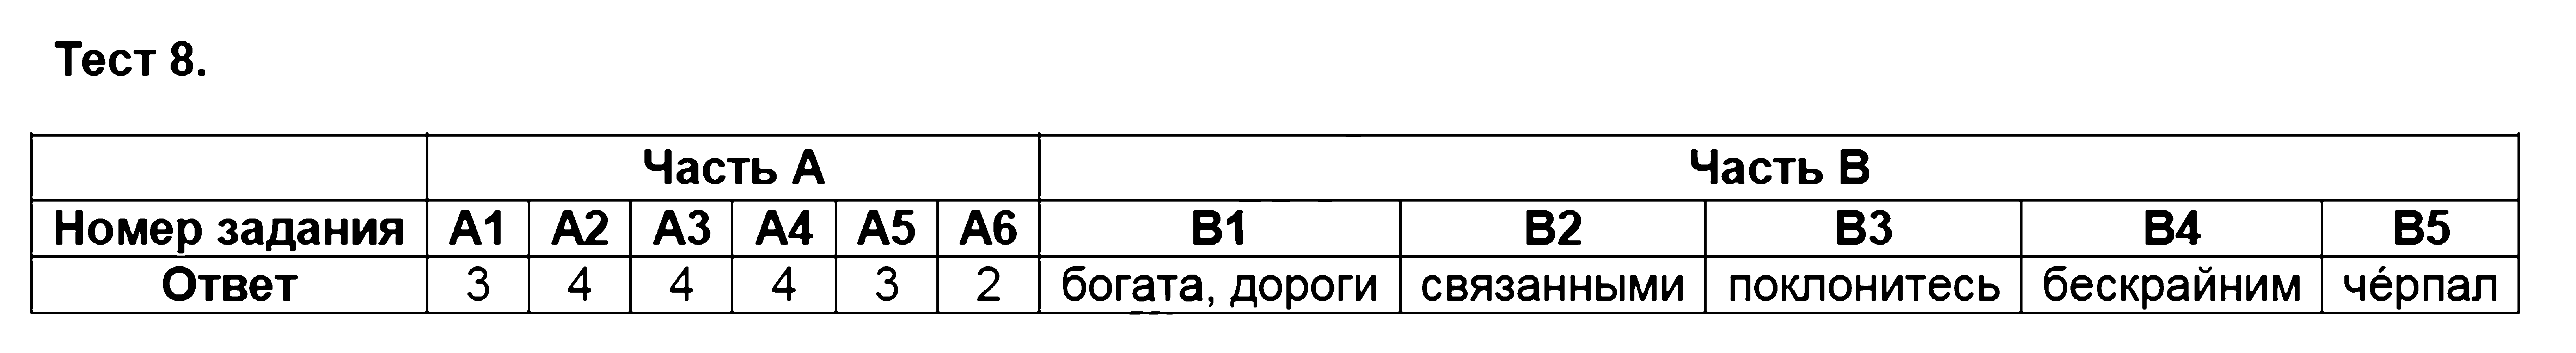 ГДЗ Русский язык 8 класс - Тест 8